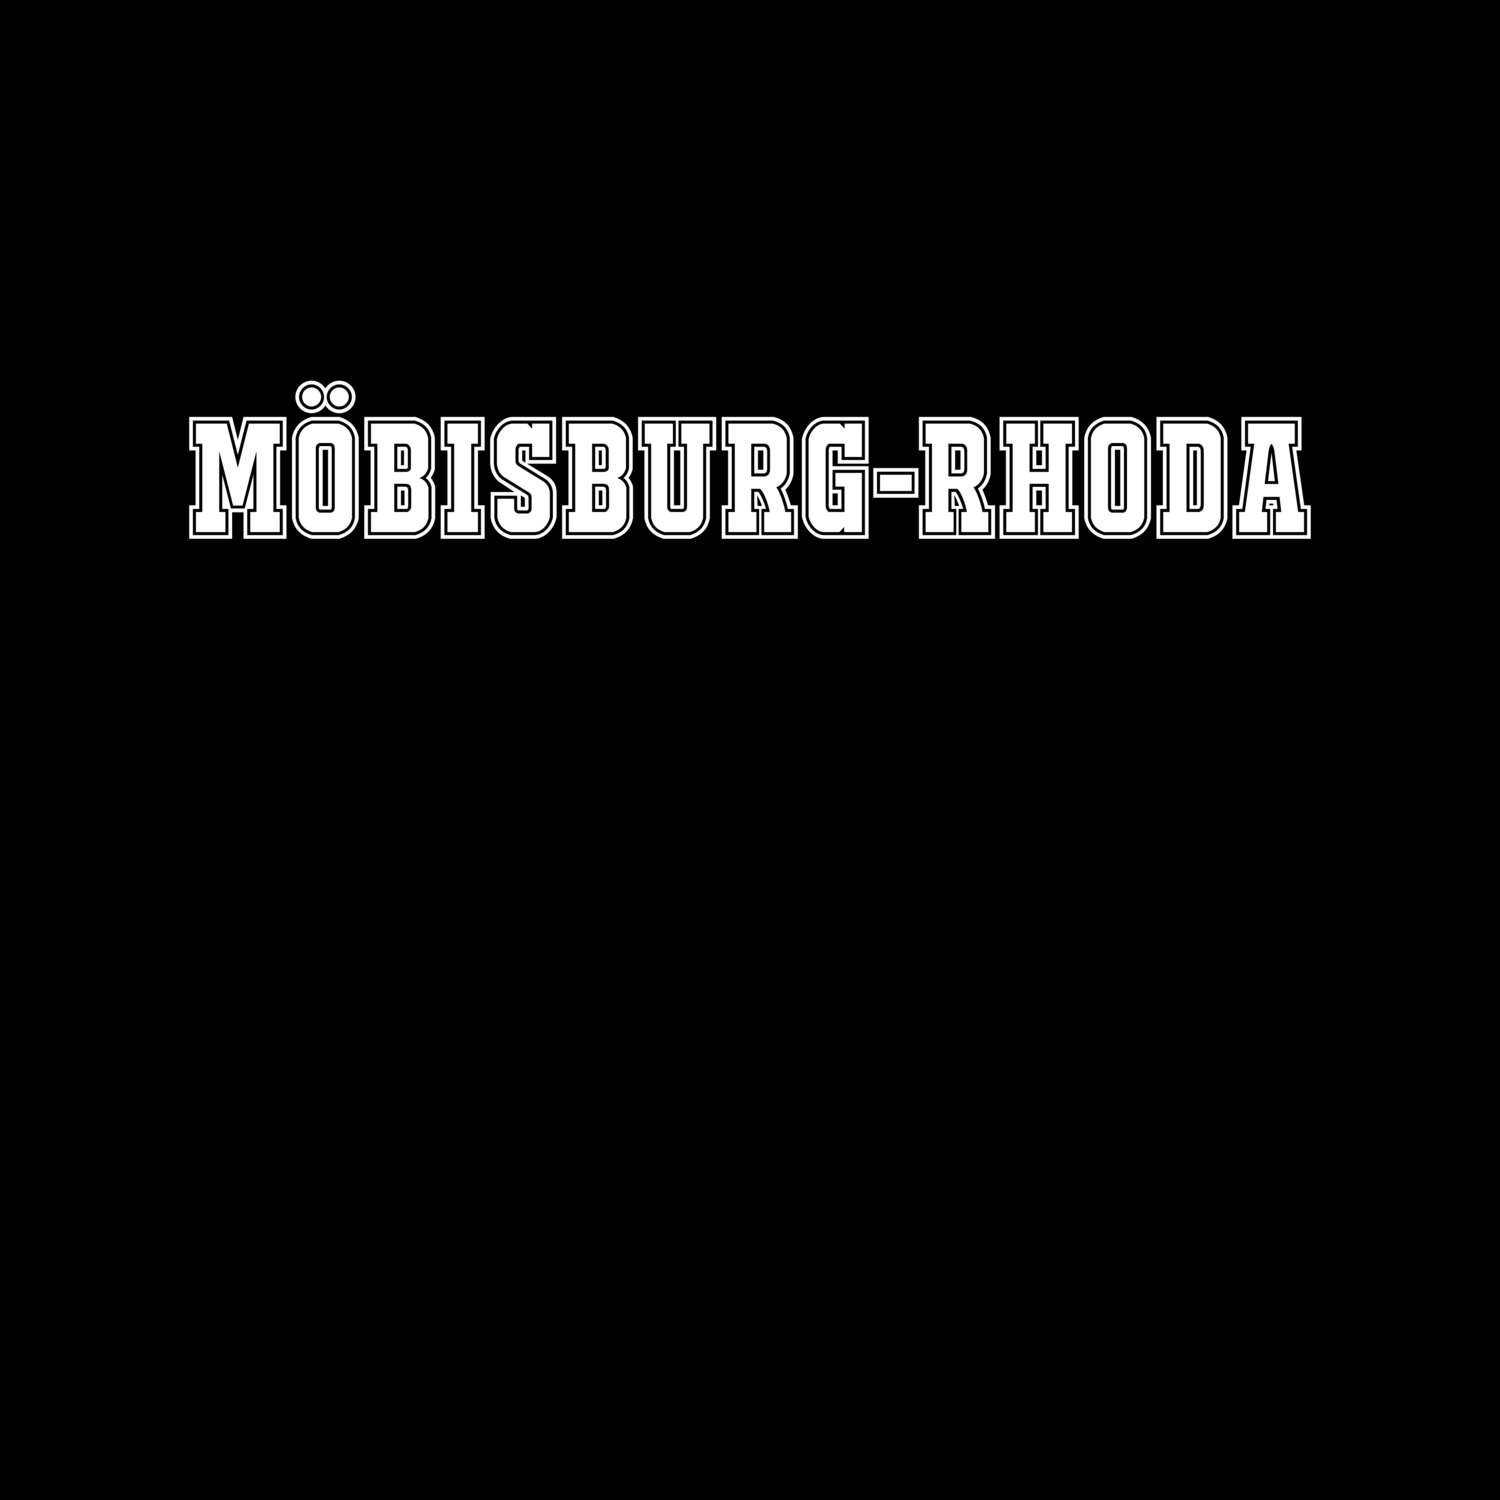 Möbisburg-Rhoda T-Shirt »Classic«